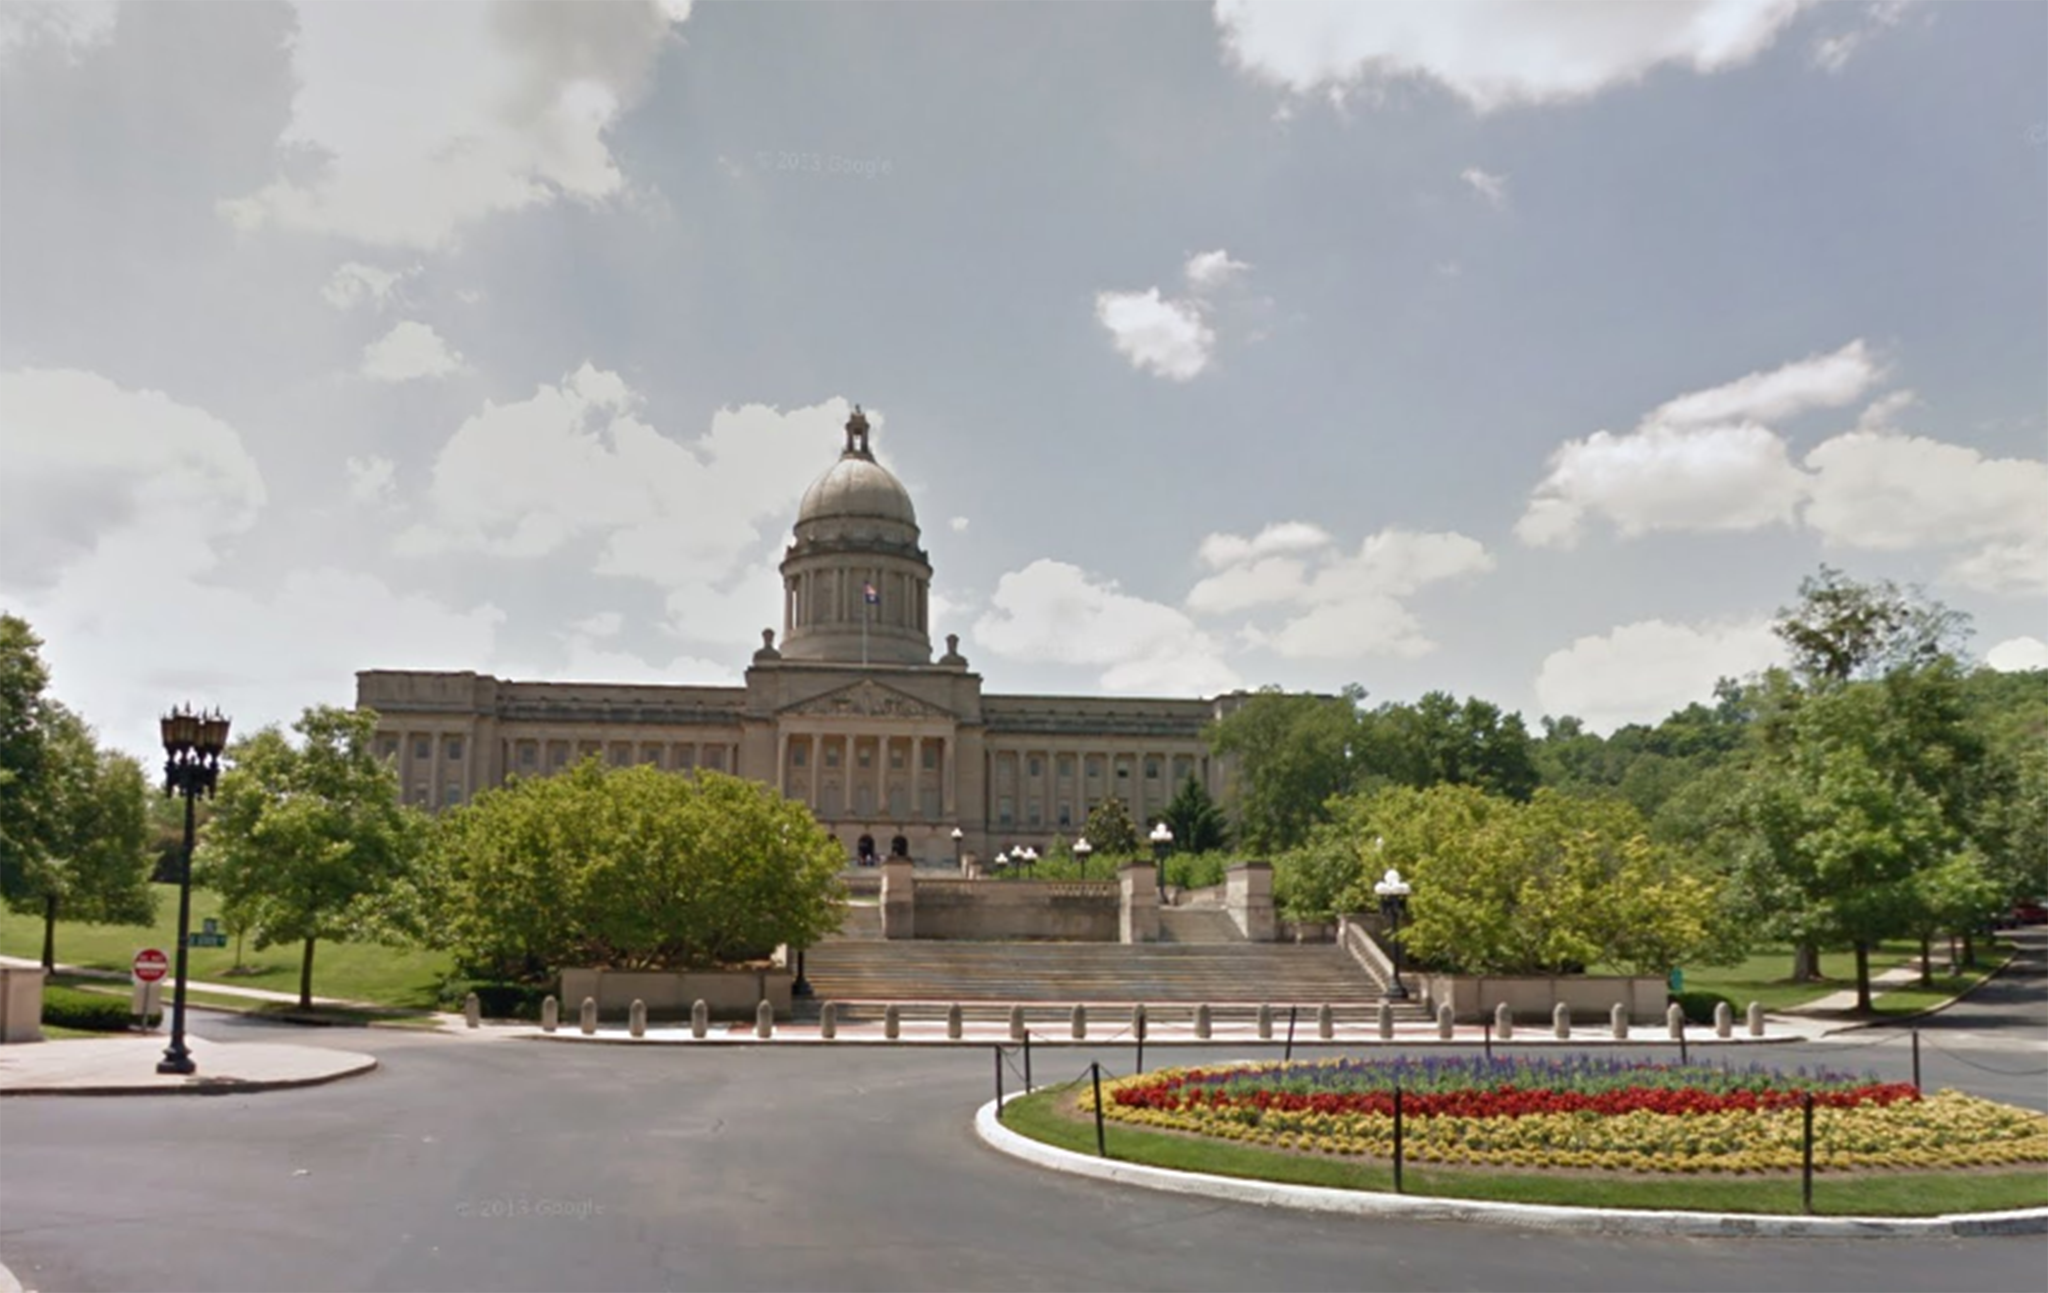 Kentucky State Capitol in Frankfort, Kentucky